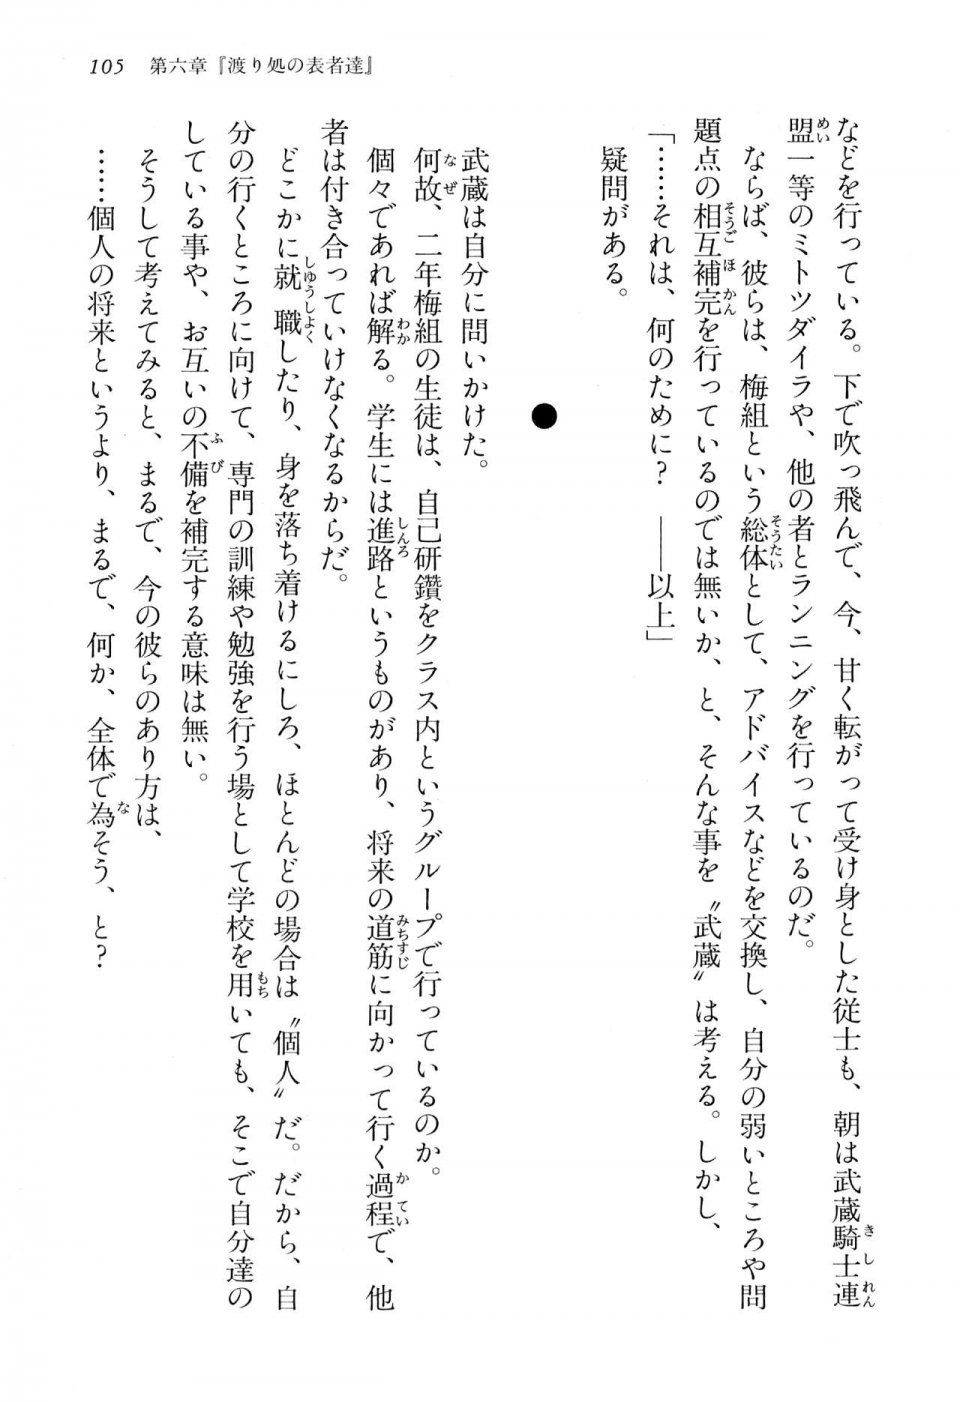 Kyoukai Senjou no Horizon BD Special Mininovel Vol 2(1B) - Photo #109